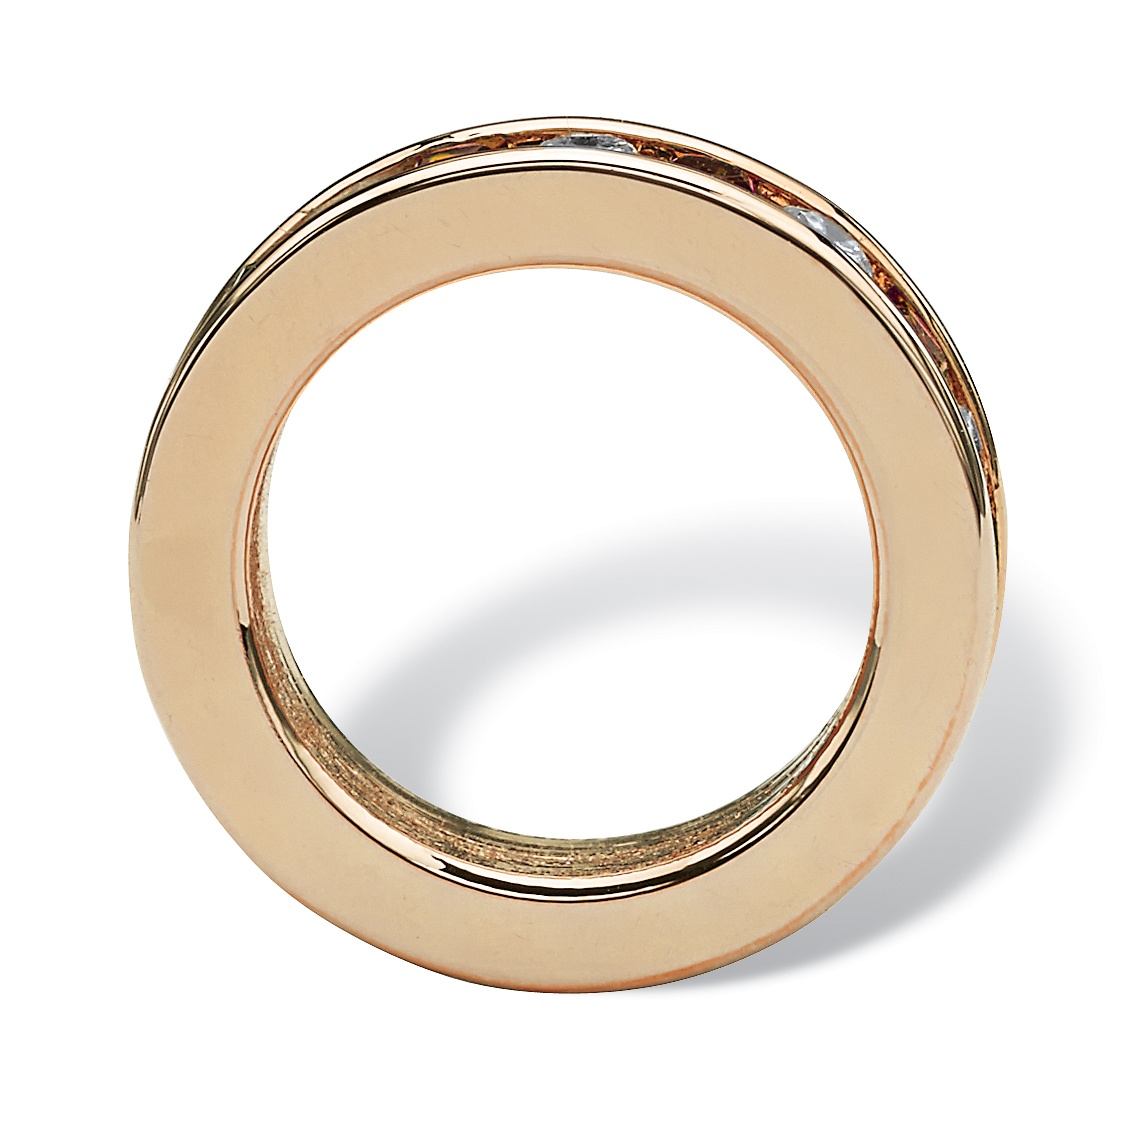 Birthstone 14k Gold-Plated Ring Charm | eBay